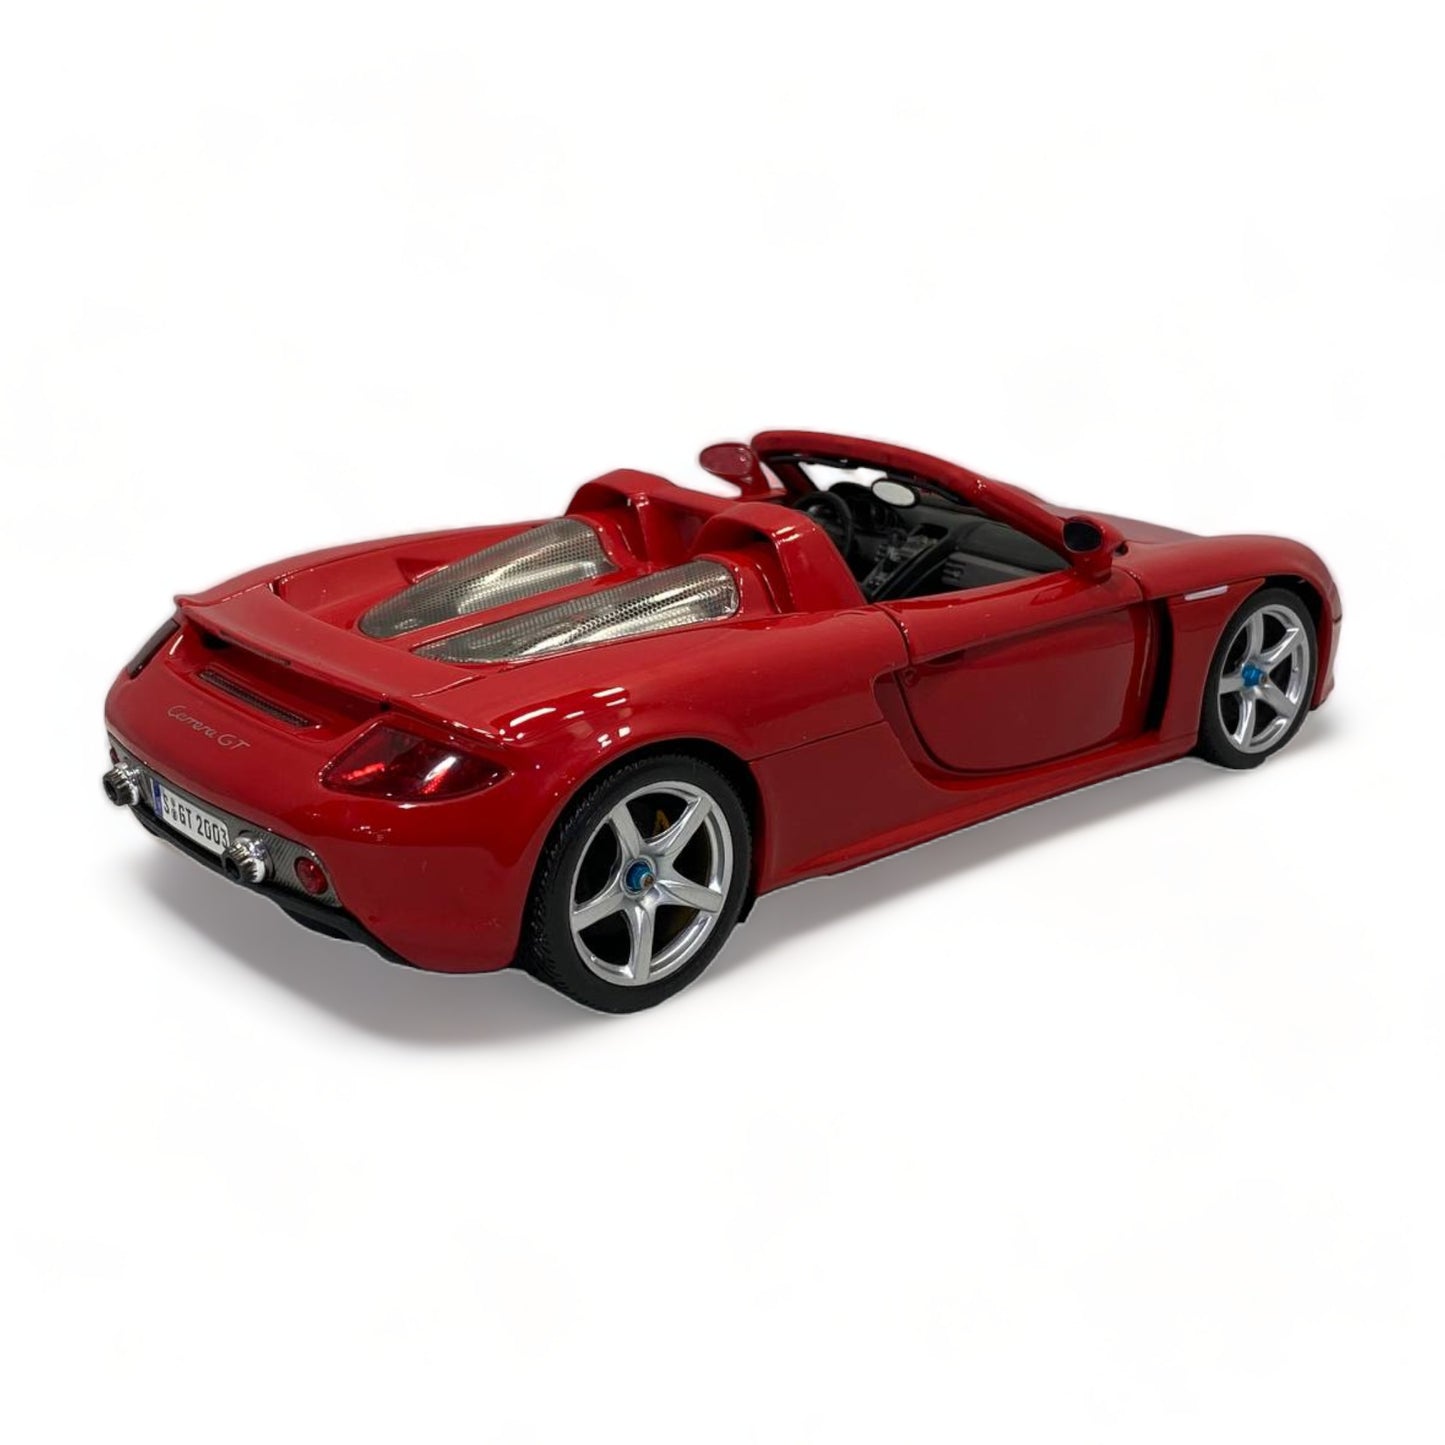 1/18 Diecast Maisto Porsche Carrera GT RED Scale Model Car|Sold in Dturman.com Dubai UAE.